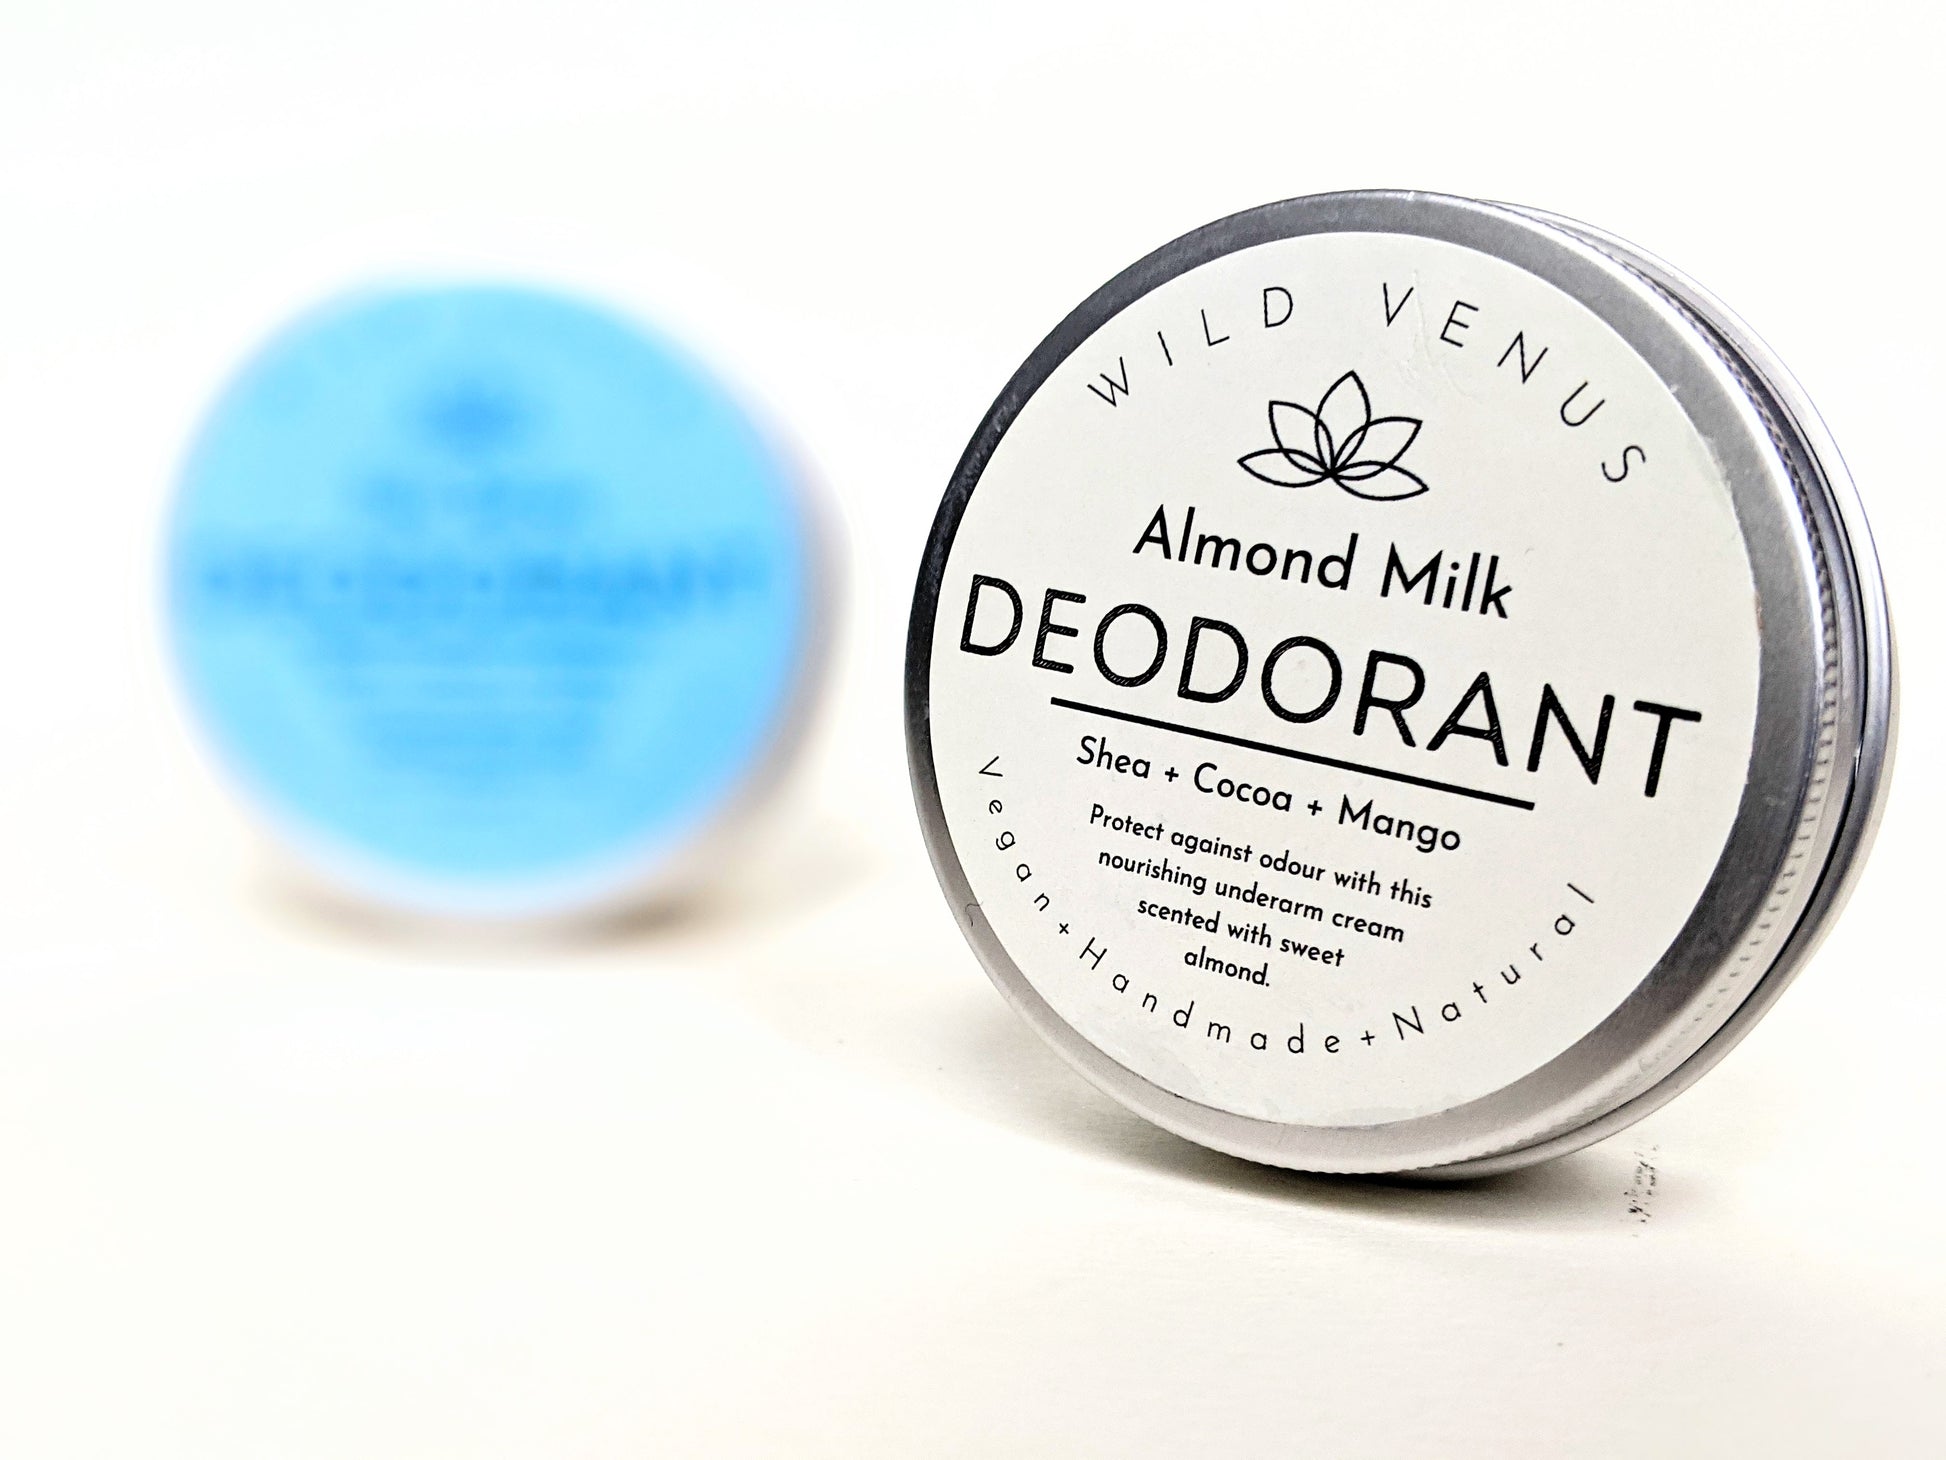 A tin of Almond Milk deodorant in front of the Sea Spray Deodorant. 